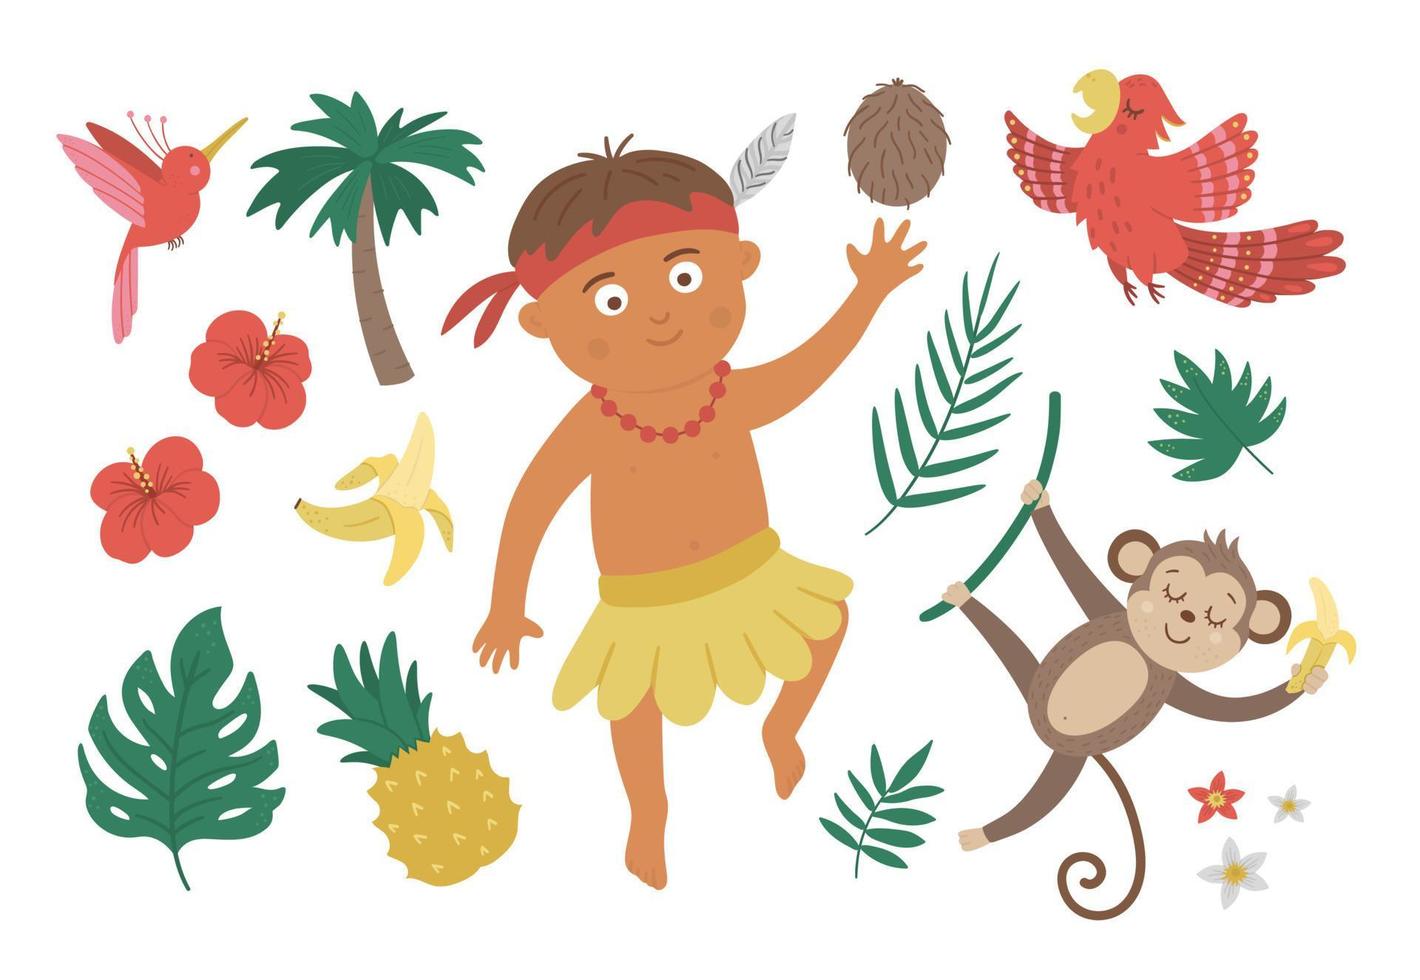 vektor platt afrikansk eller papuansk pojke med fåglar, blommor, frukter, apa. söt tropisk, djungel, exotisk uppsättning element. rolig sommar clipart samling